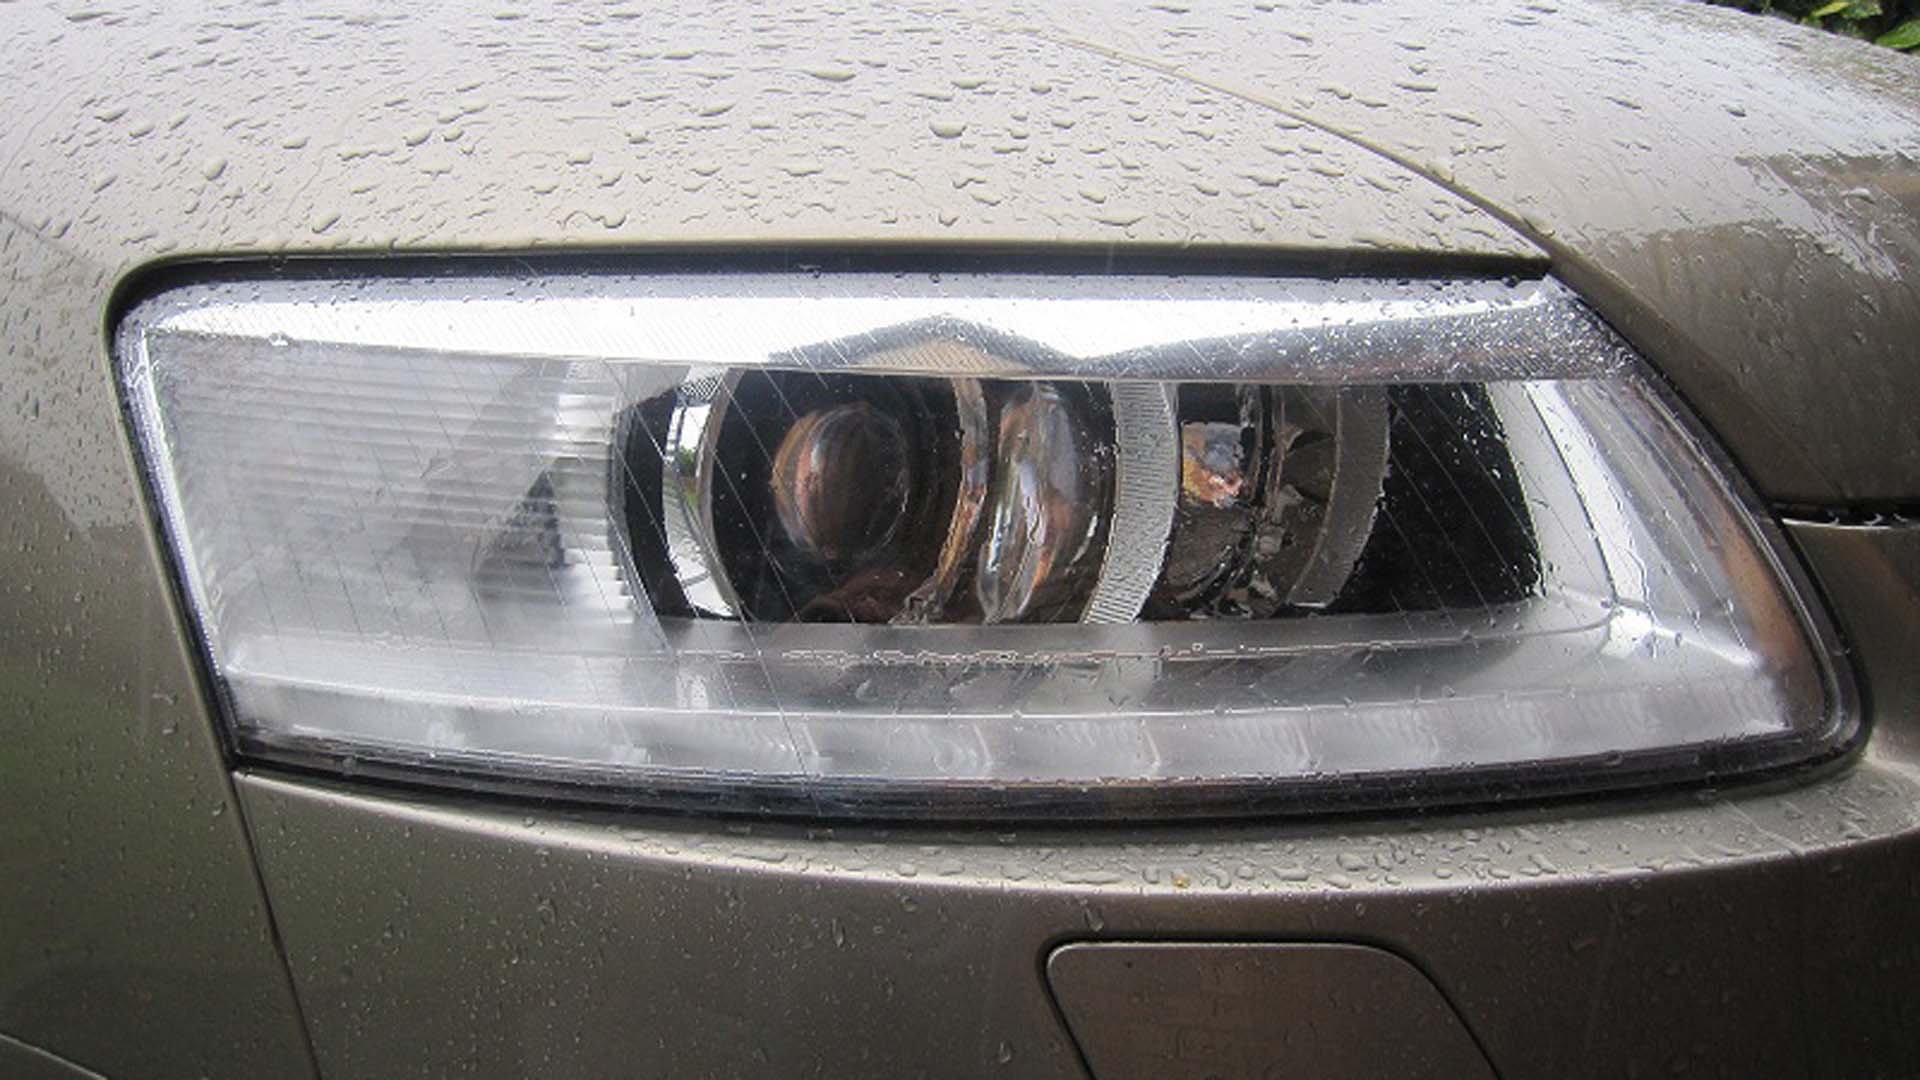 mest mærke porter Audi: Why are My Headlights Dim? | Audiworld